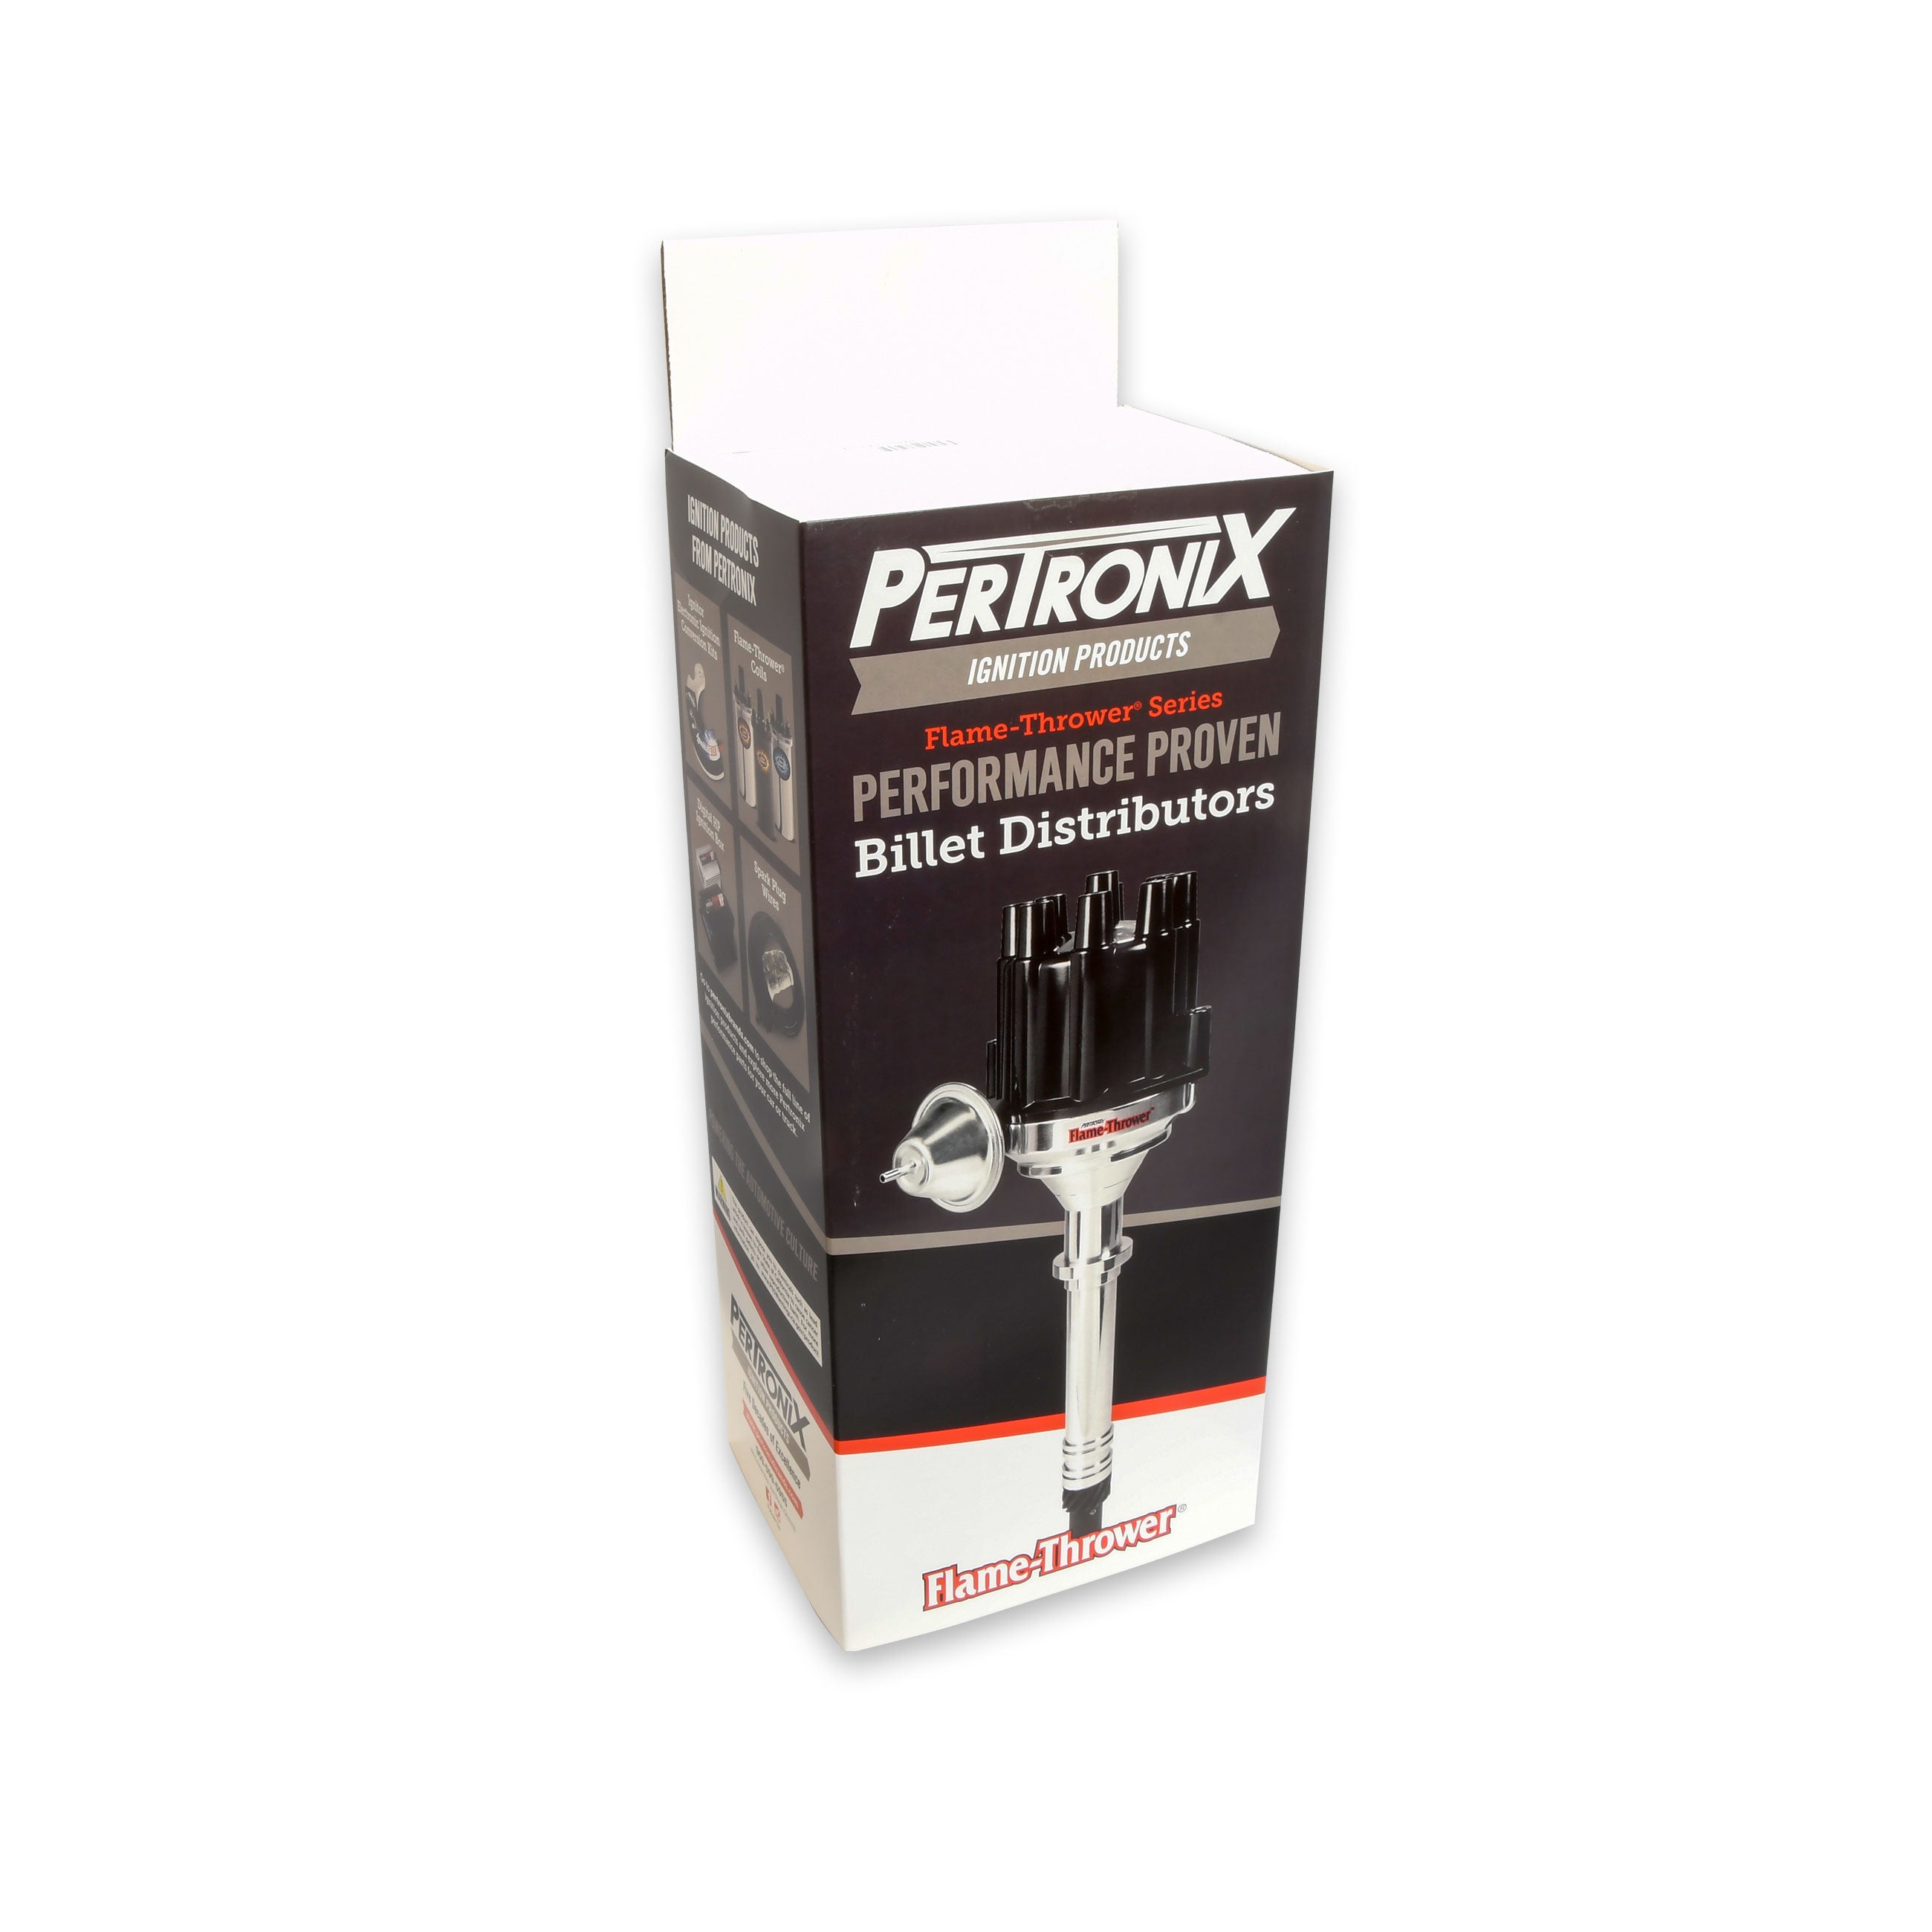 PerTronix D100701 Flame-Thrower Electronic Distributor Billet